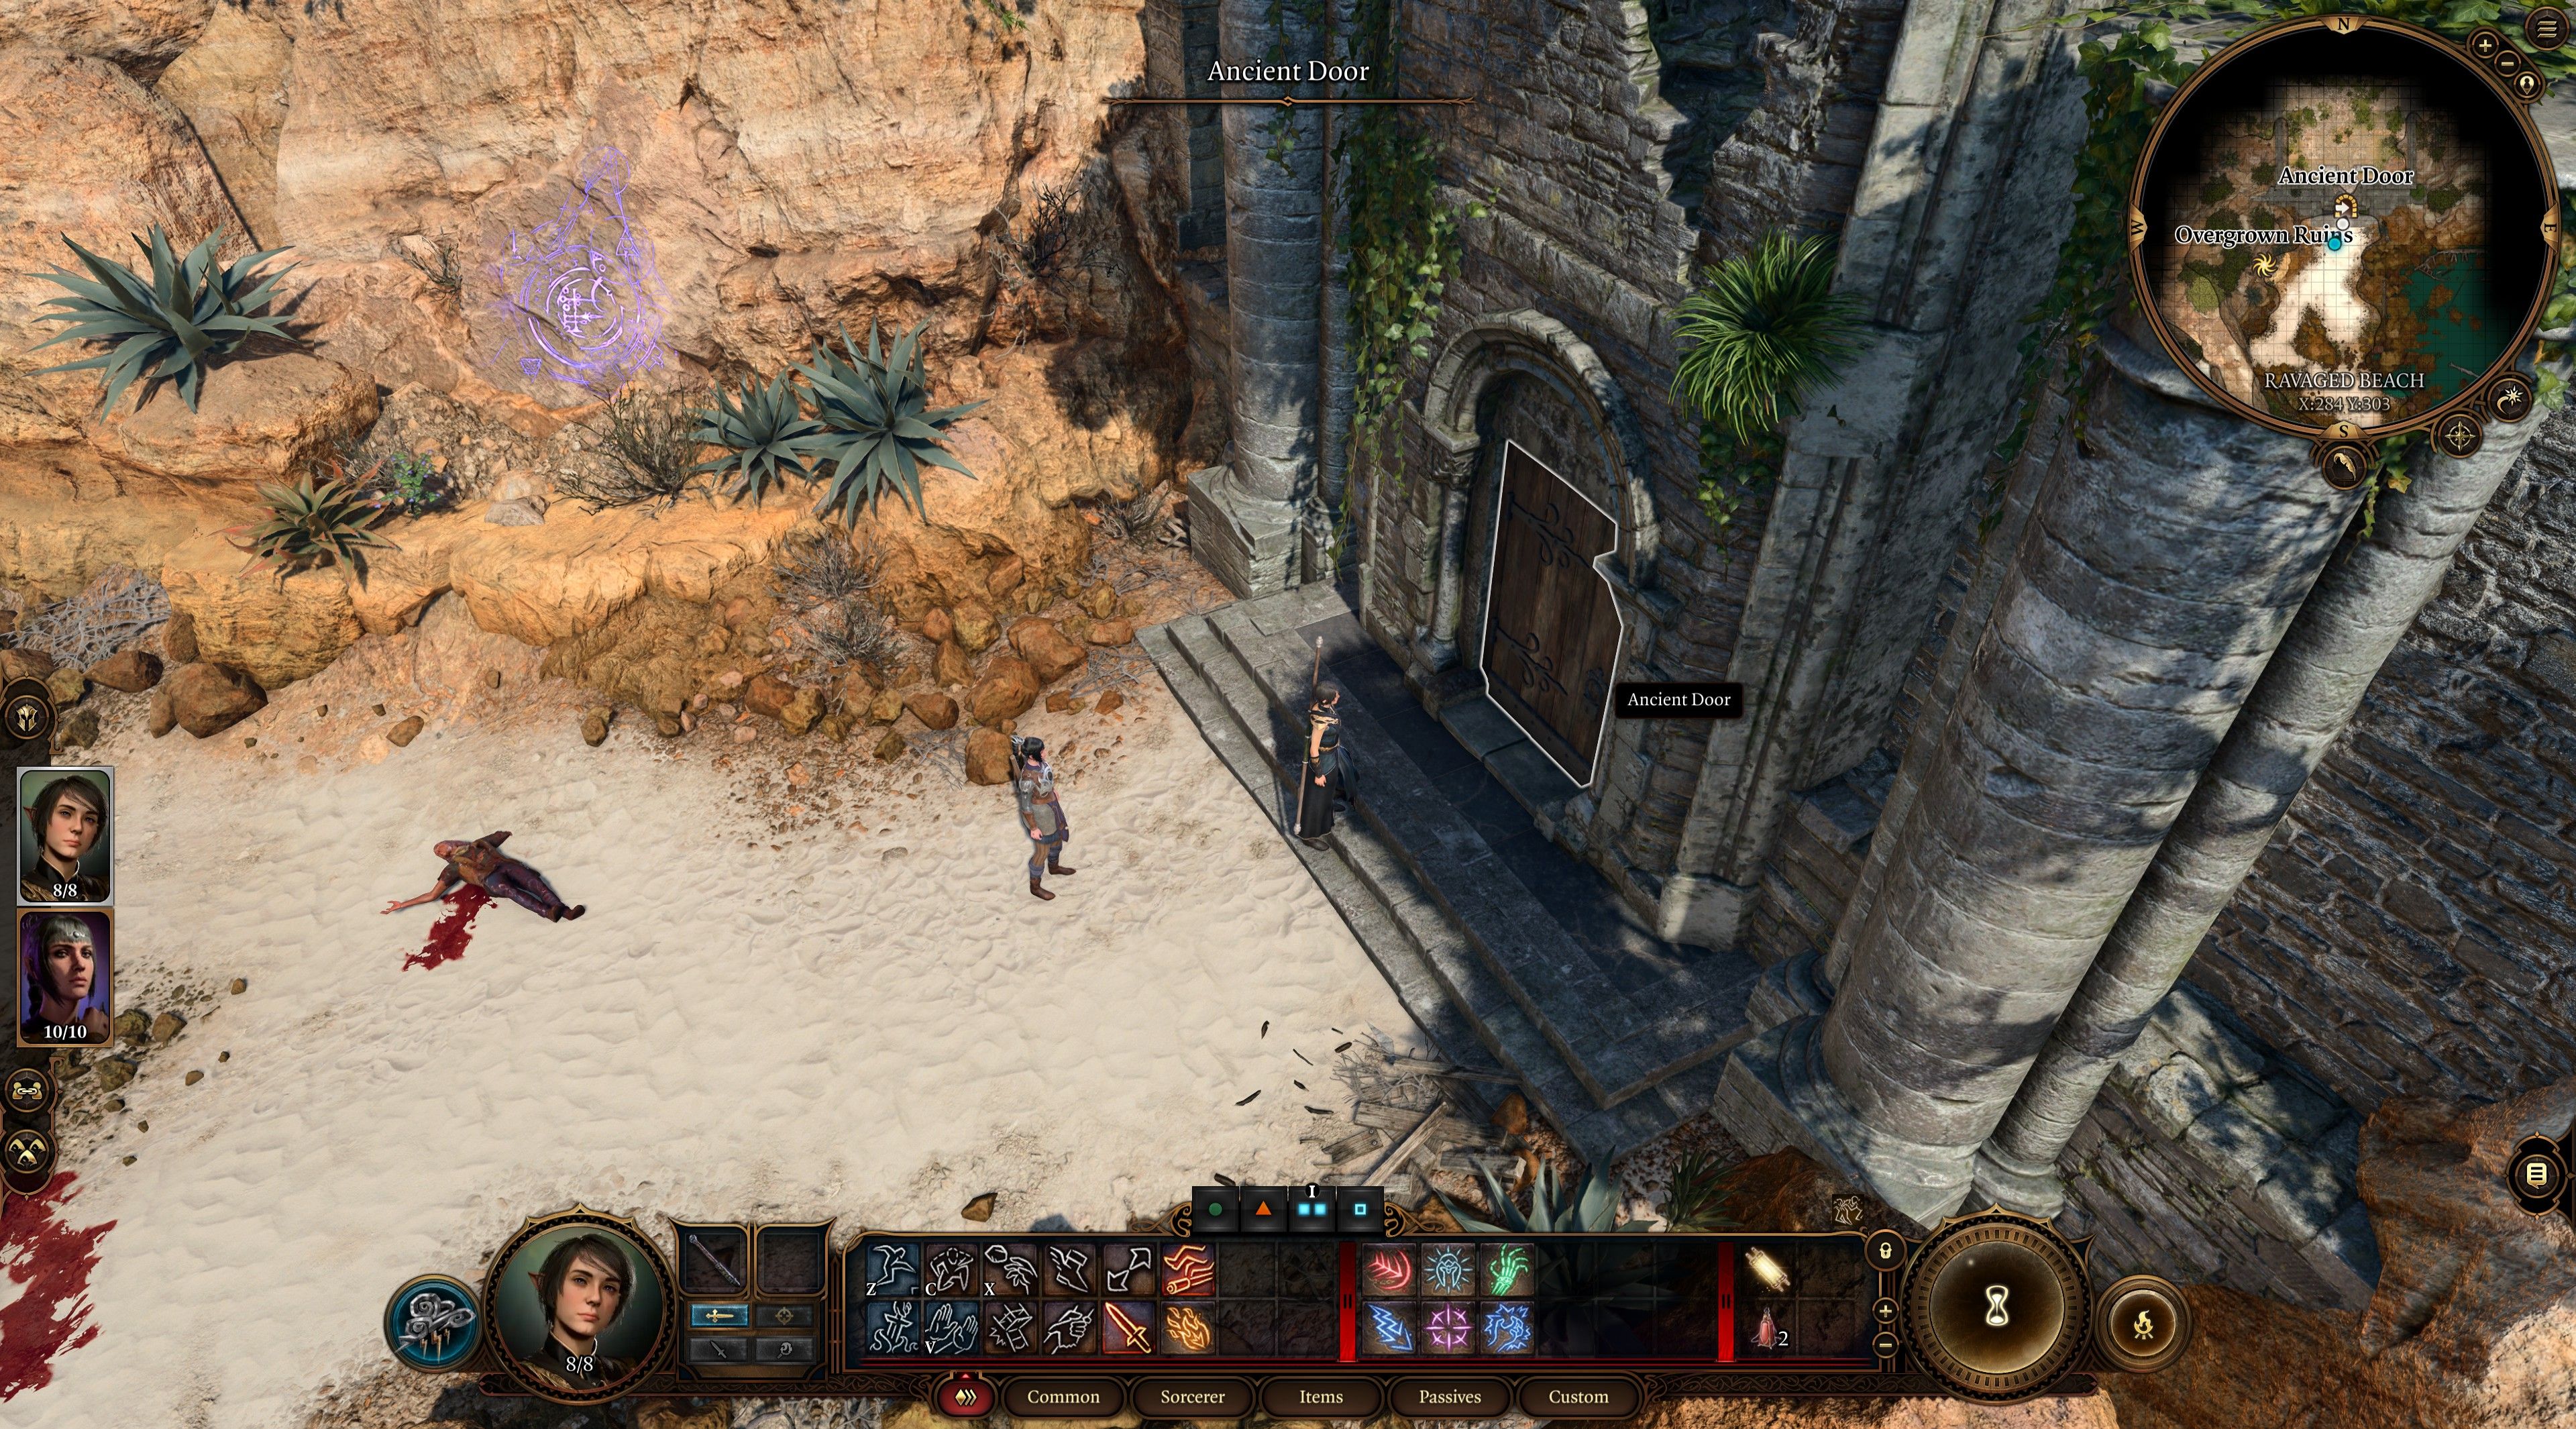 Baldur's Gate 3 Player And Shadowheart Looking At Locked Door To Ruins On Ravaged Beach